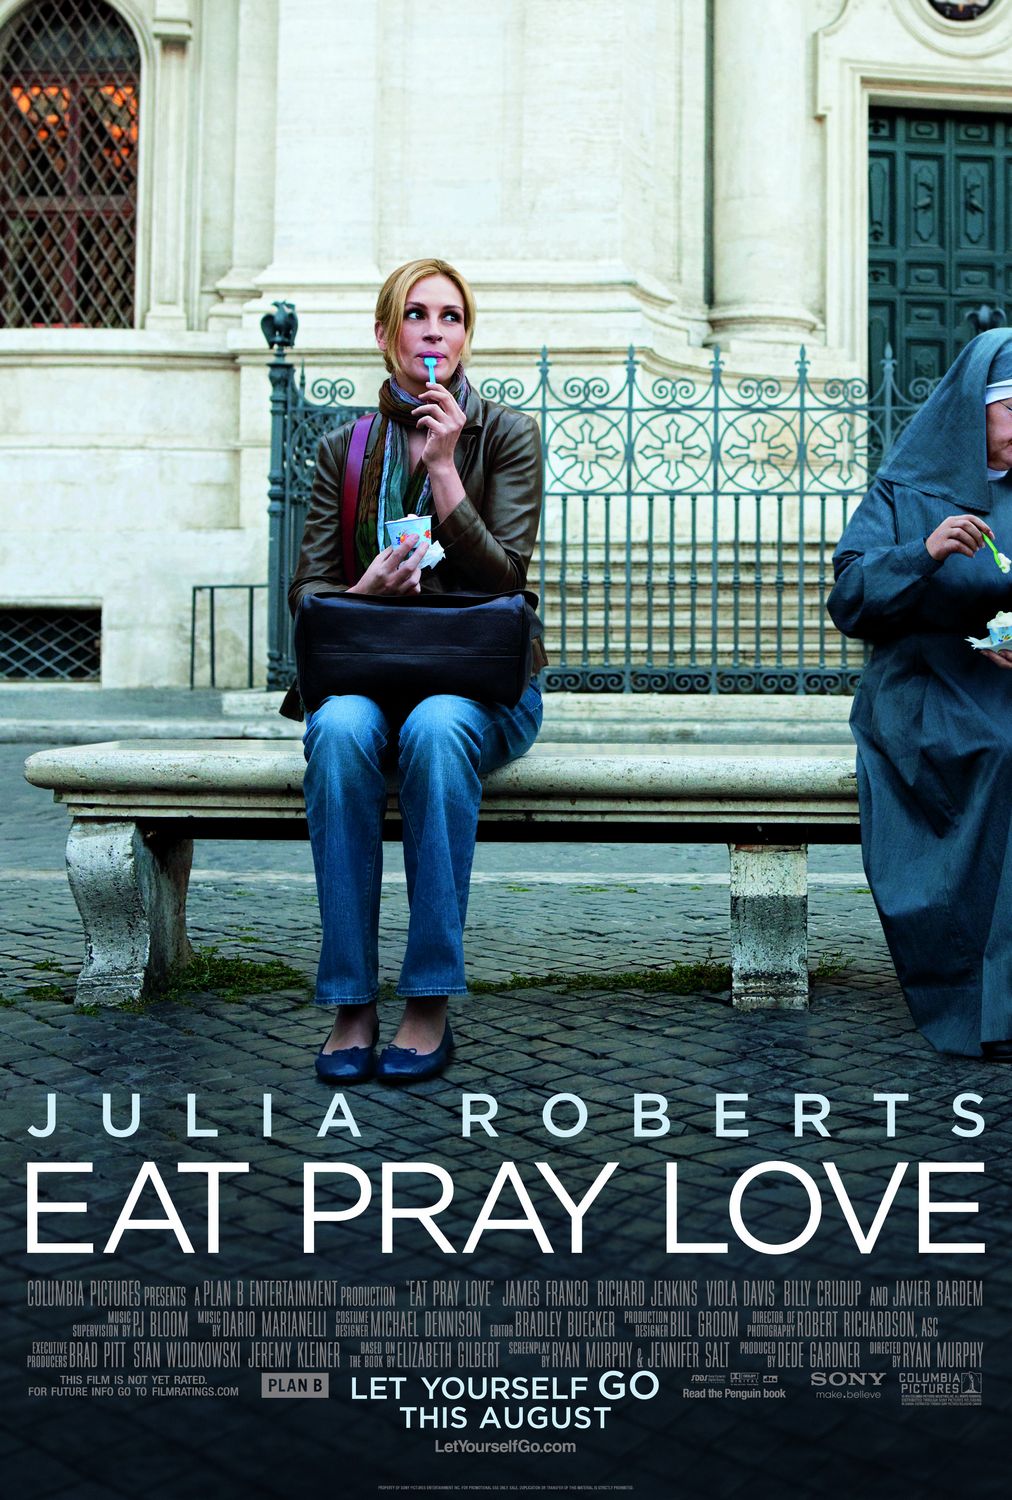 Eat Pray Love (2010)dvdplanetstorepk